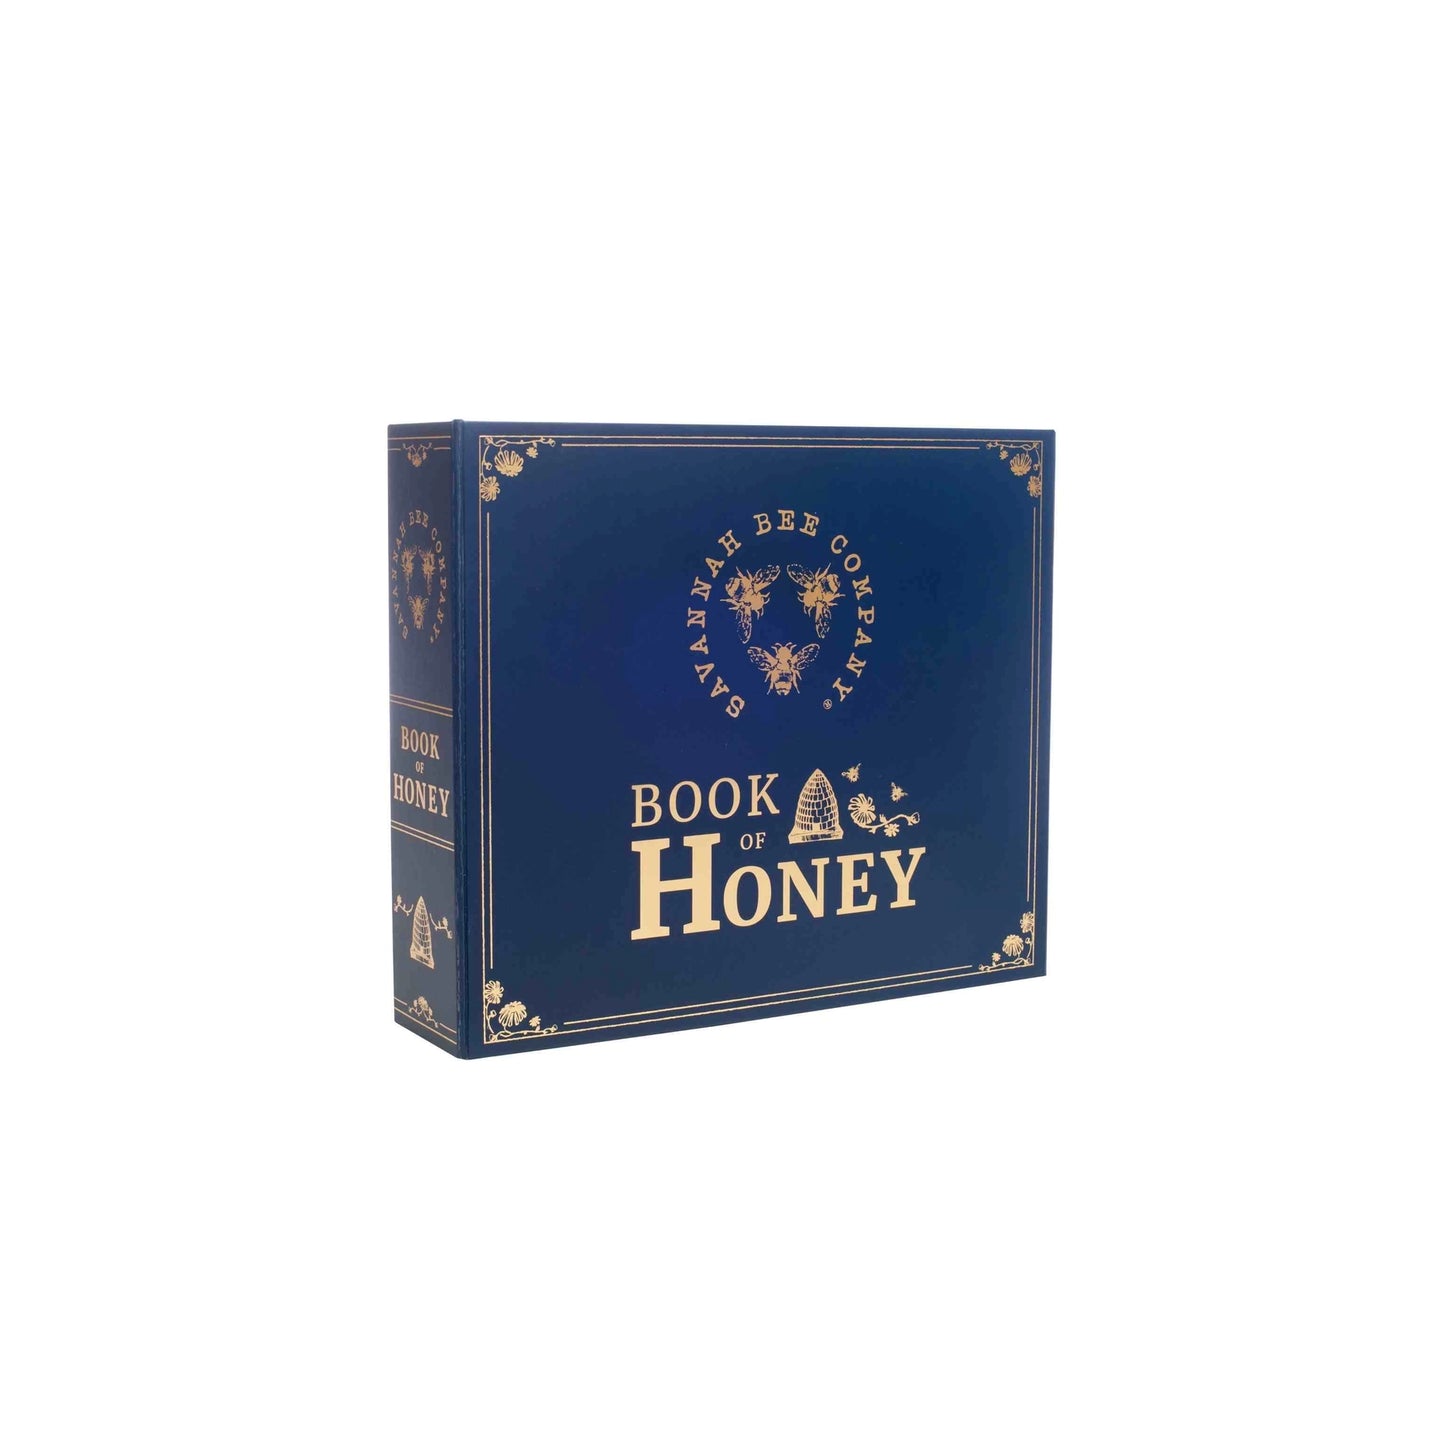 Savannah Bee Company: Book of Honey (Six 3oz. Jars)